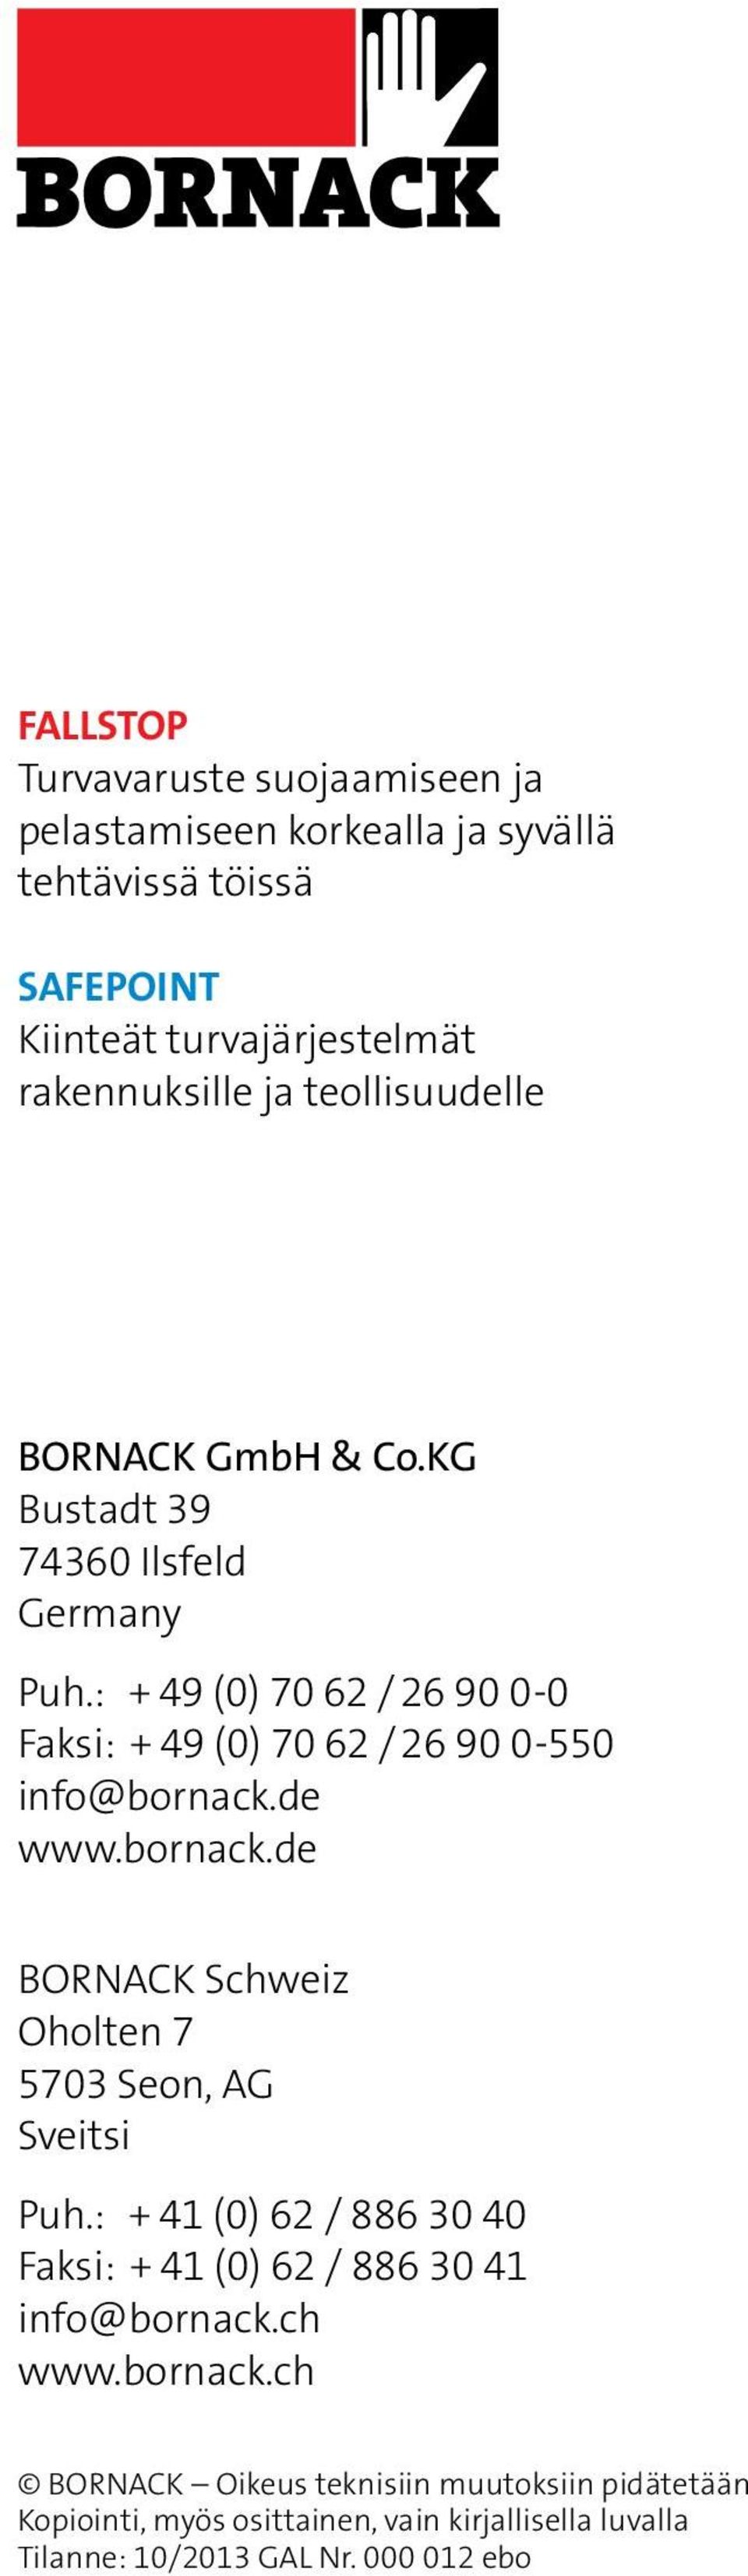 : + 49 (0) 70 62 / 26 90 0-0 Faksi: + 49 (0) 70 62 / 26 90 0-550 info@bornack.de www.bornack.de BORNACK Schweiz Oholten 7 5703 Seon, AG Sveitsi Puh.